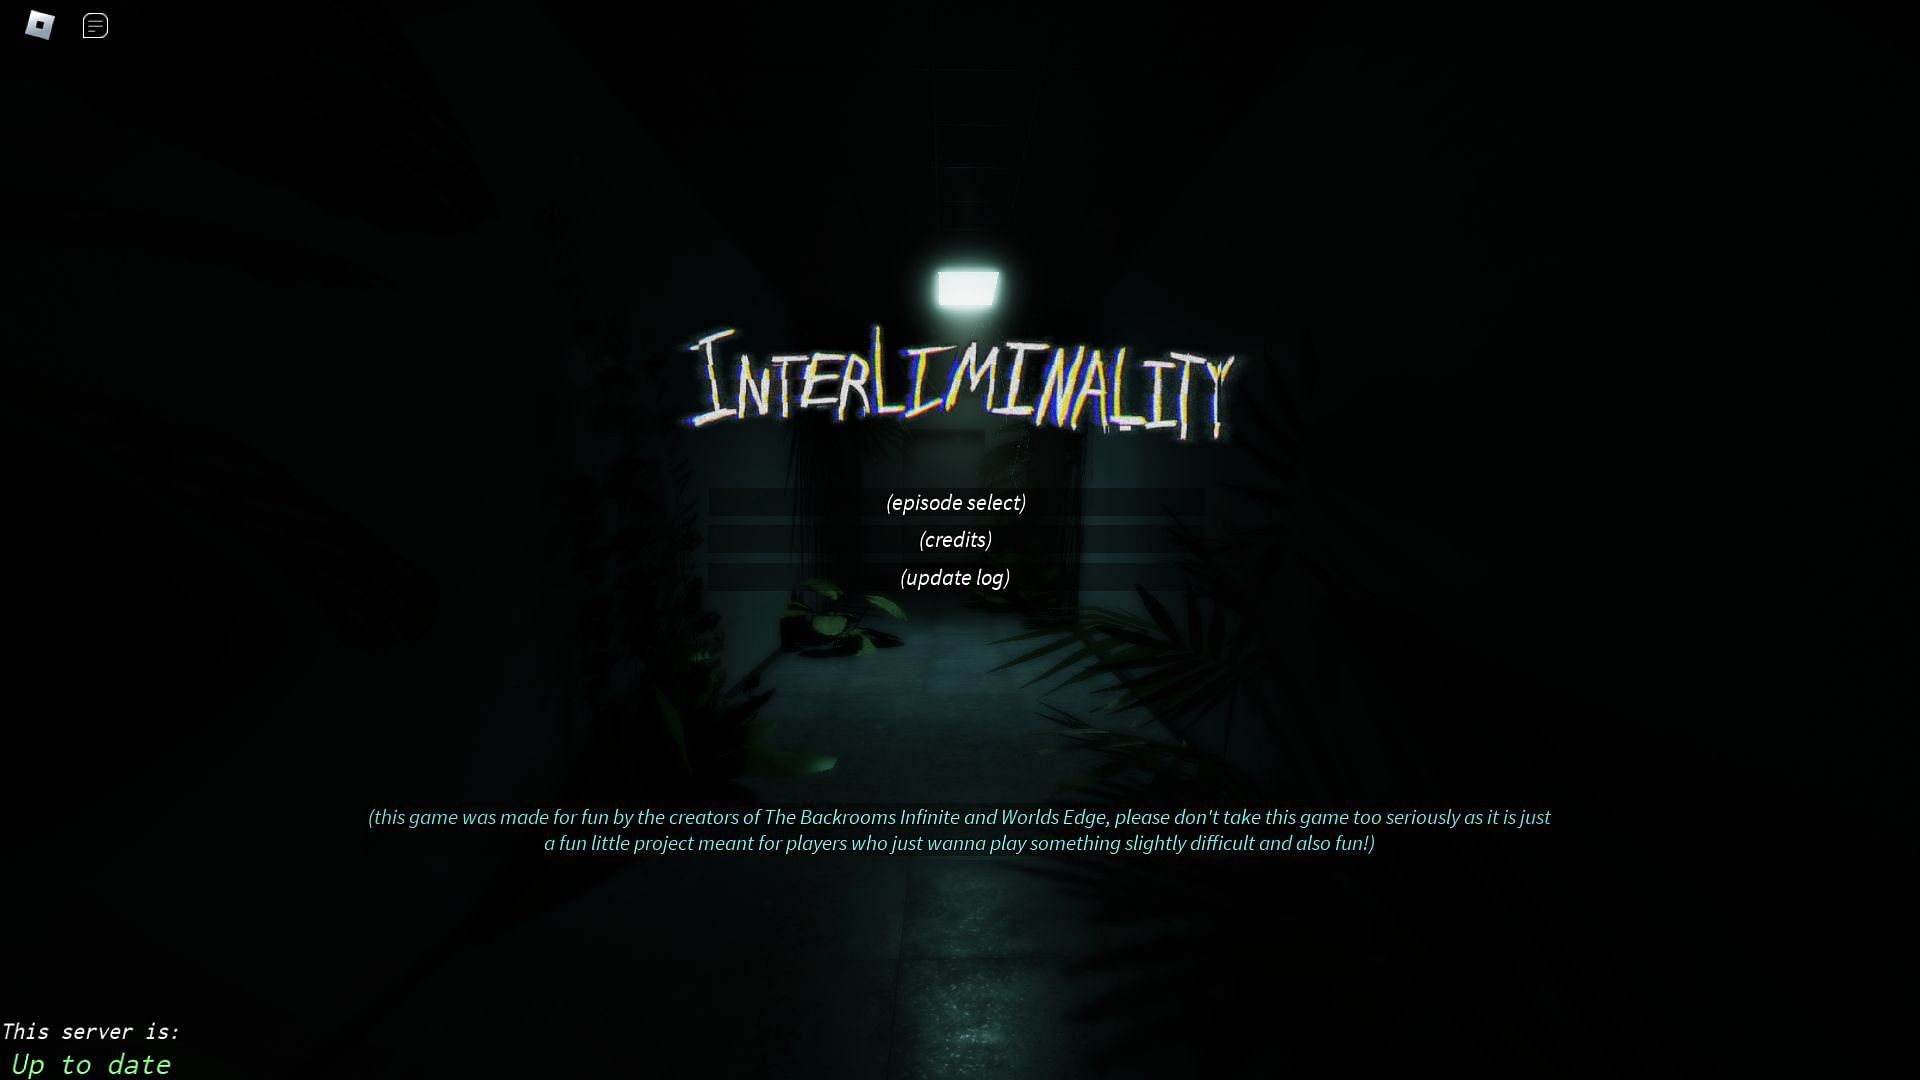 Interliminality title screen (Image via Roblox)